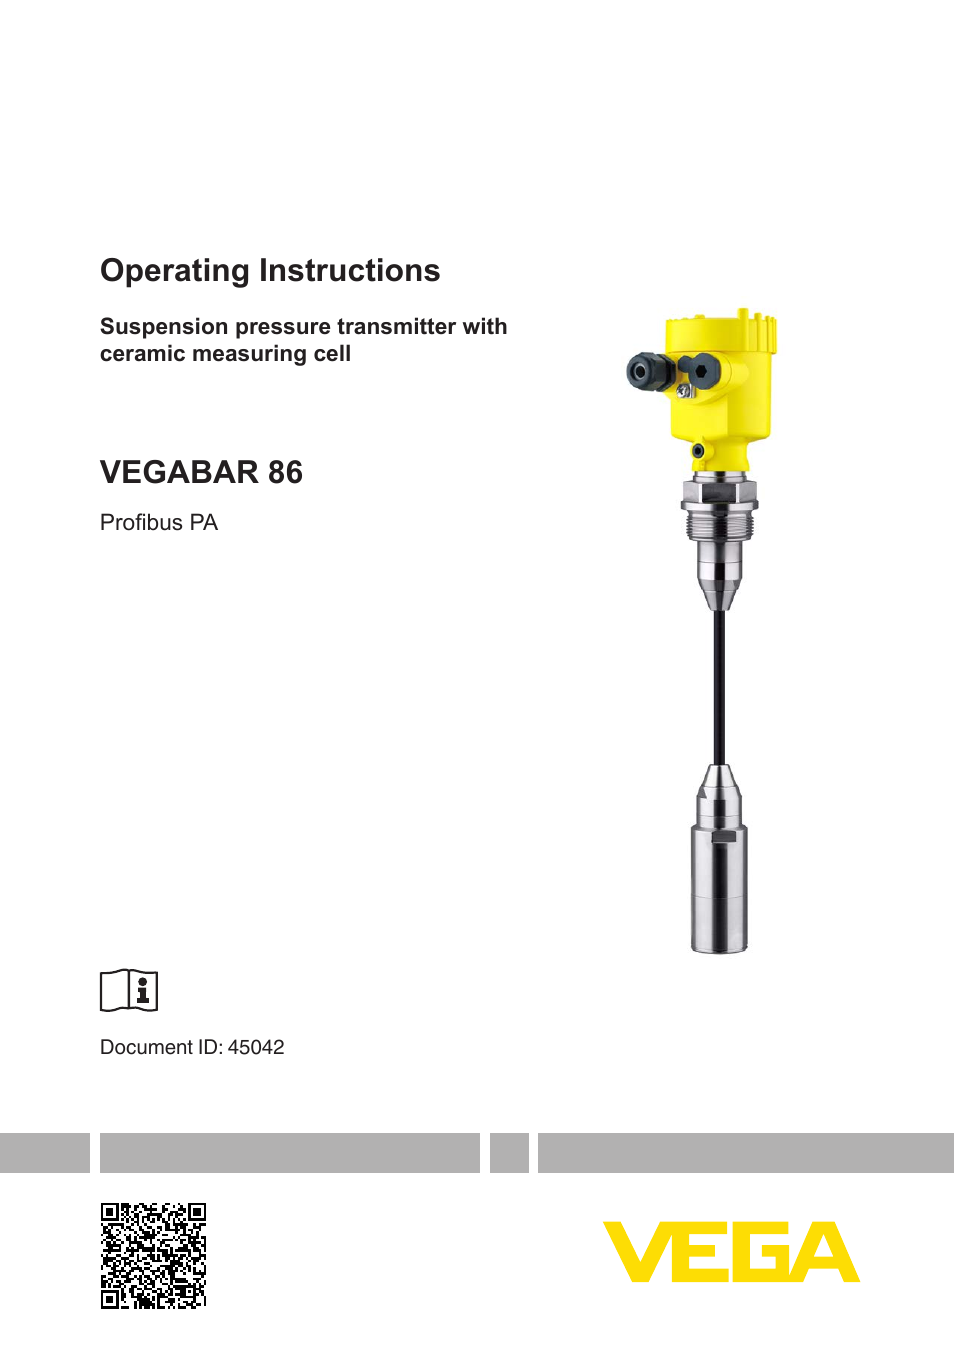 VEGABAR 86 Profibus PA - Operating Instructions